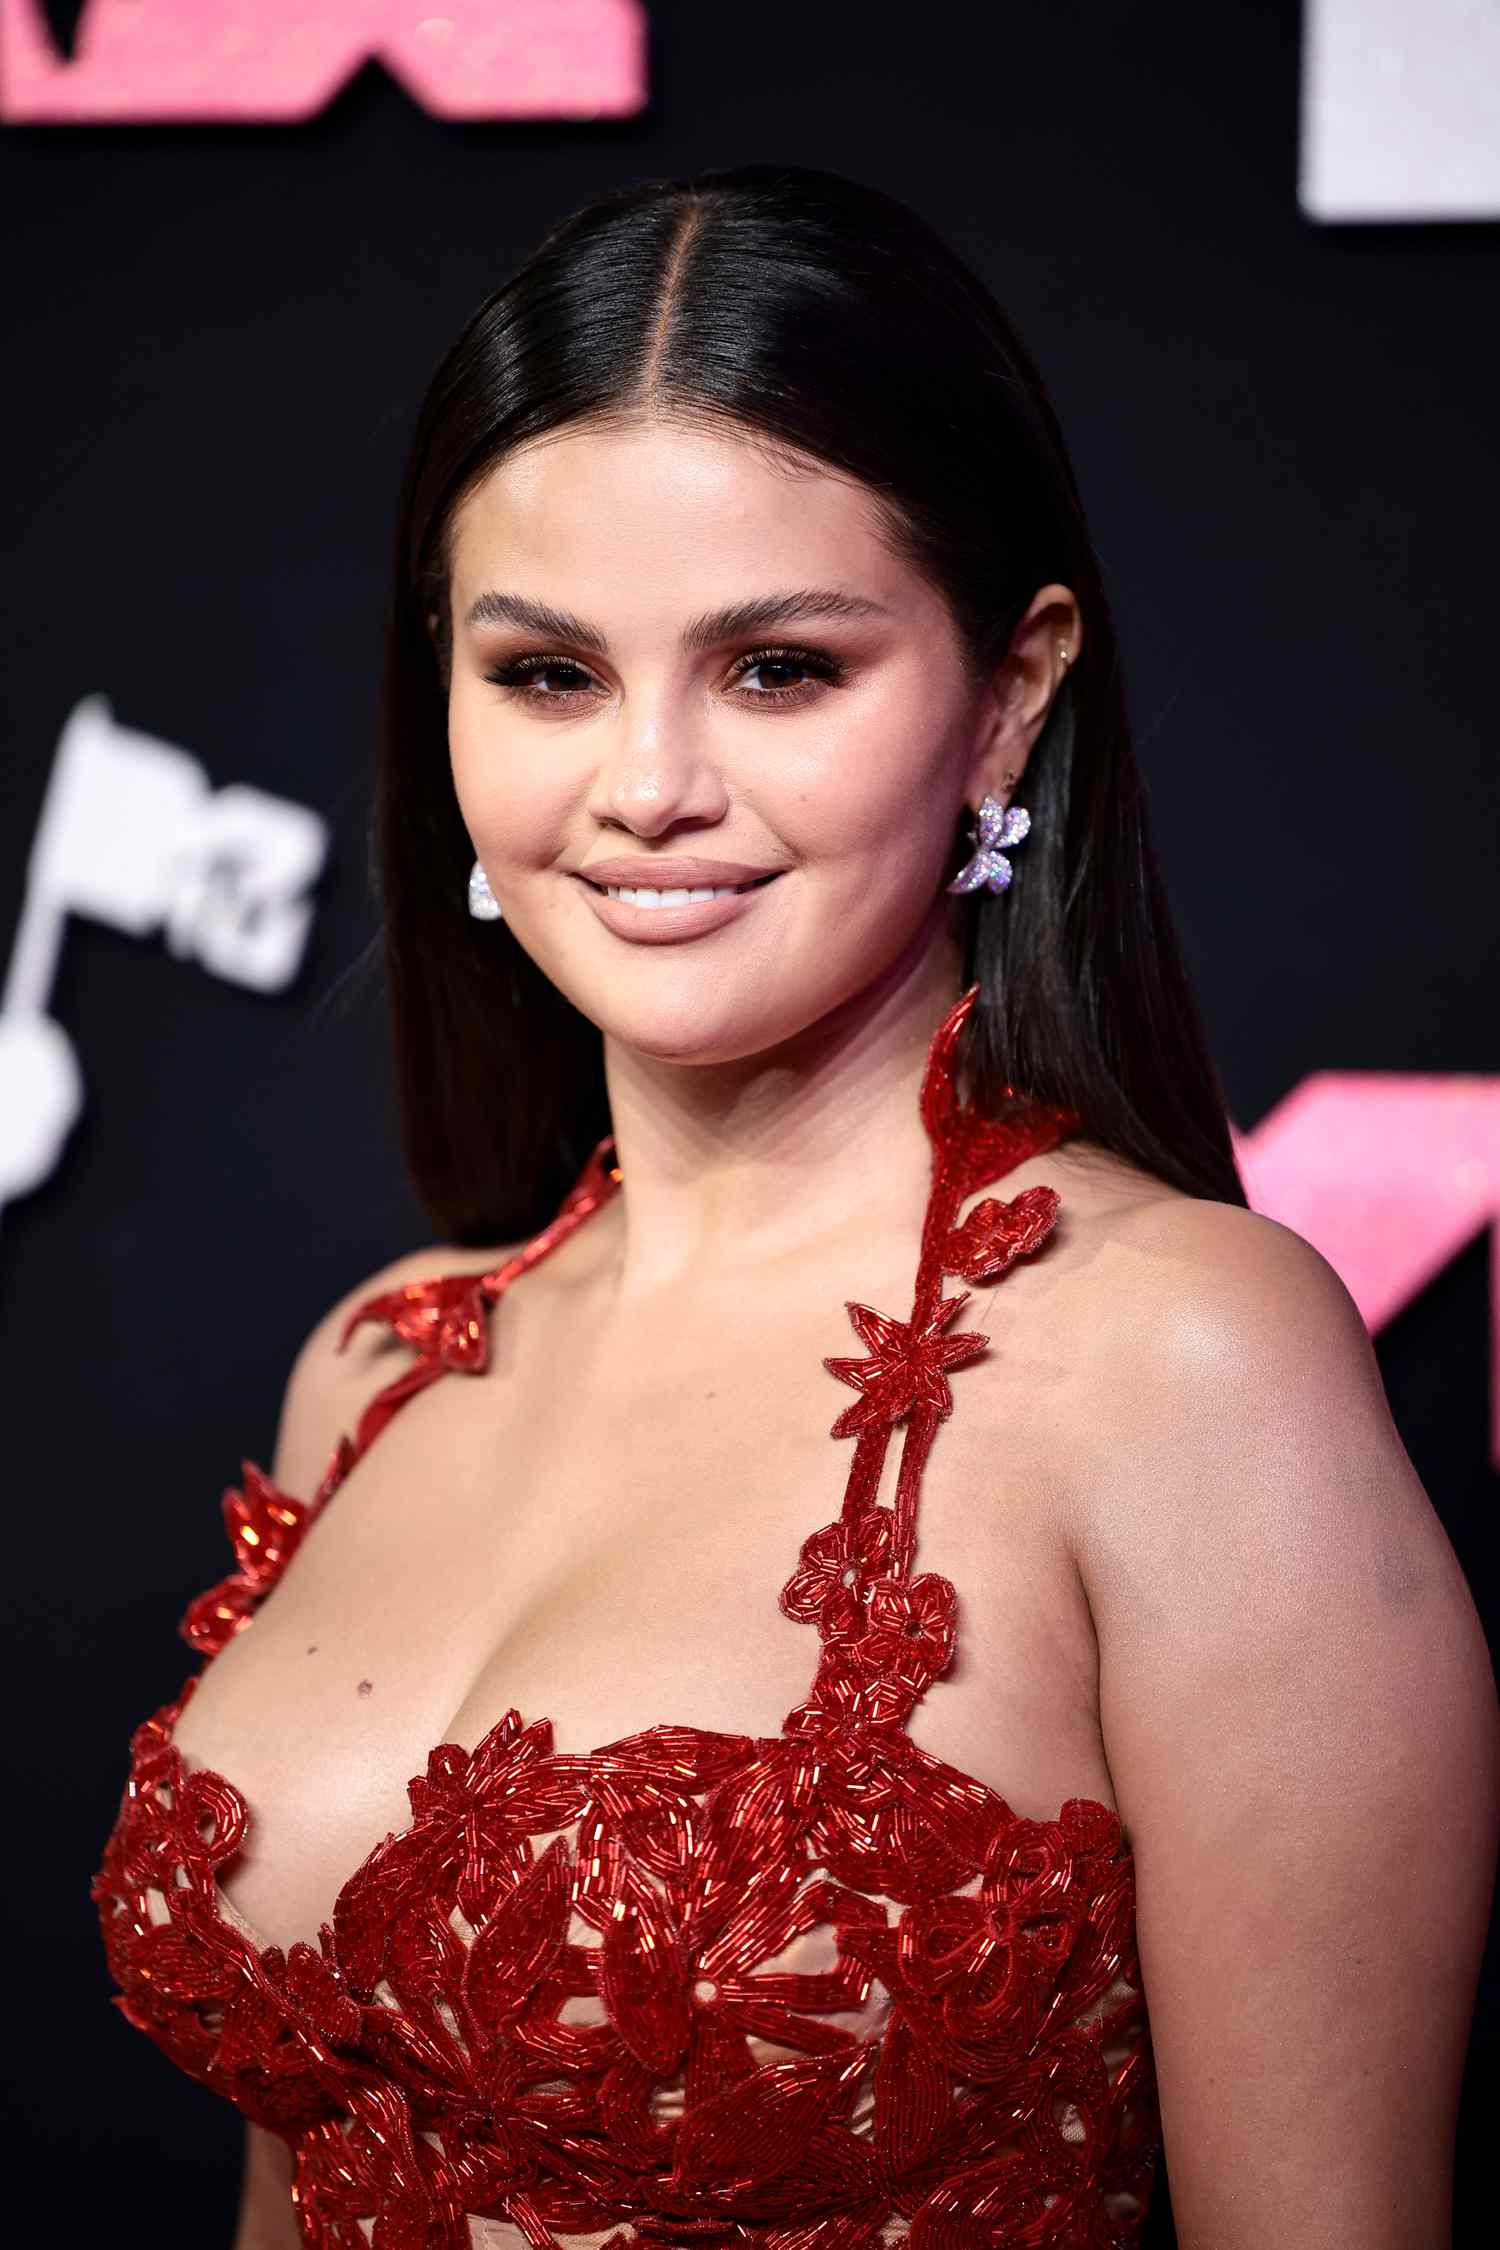 Selena Gomez wearing a red dress